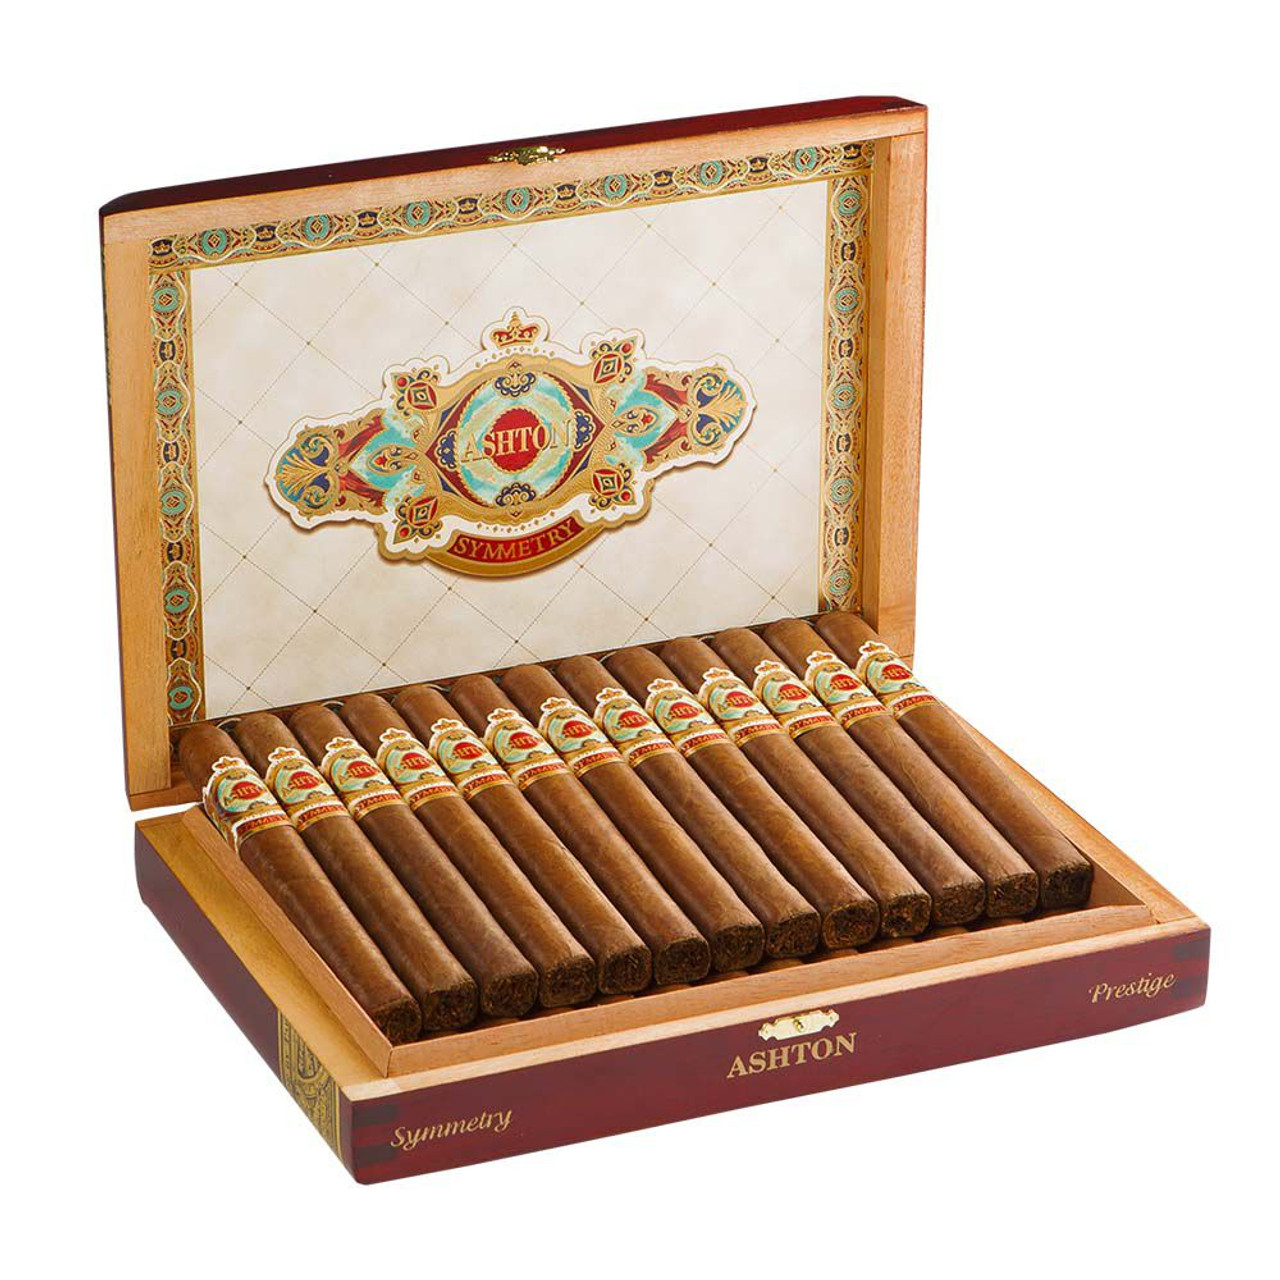 Ashton Symmetry Sublime Cigars - 6 x 52 (Box of 25) Open